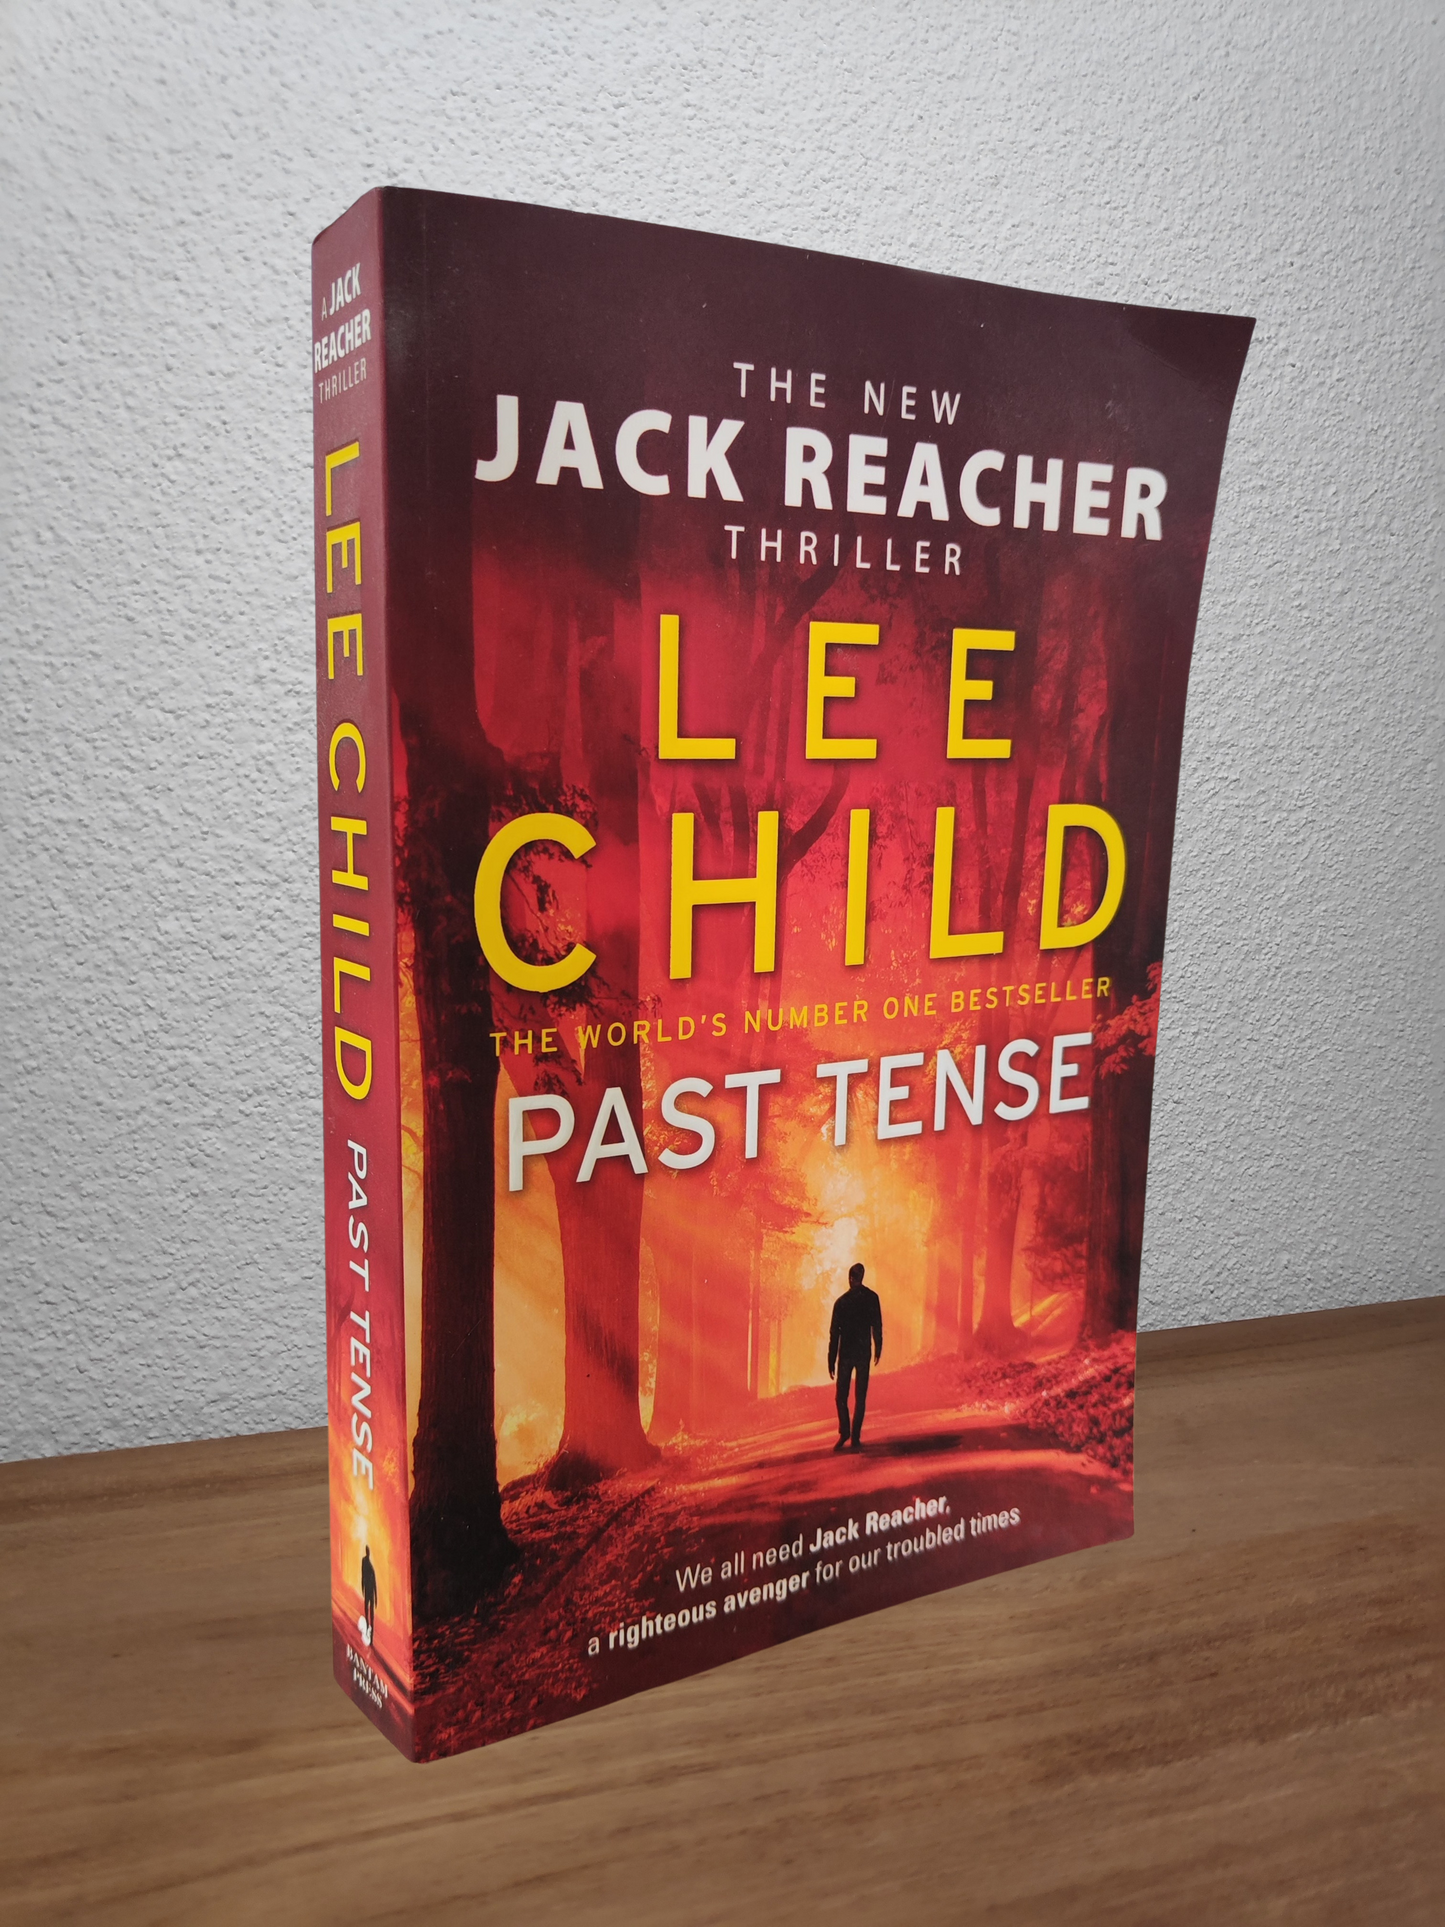 Lee Child - Past Tense (Jack Reacher #23)